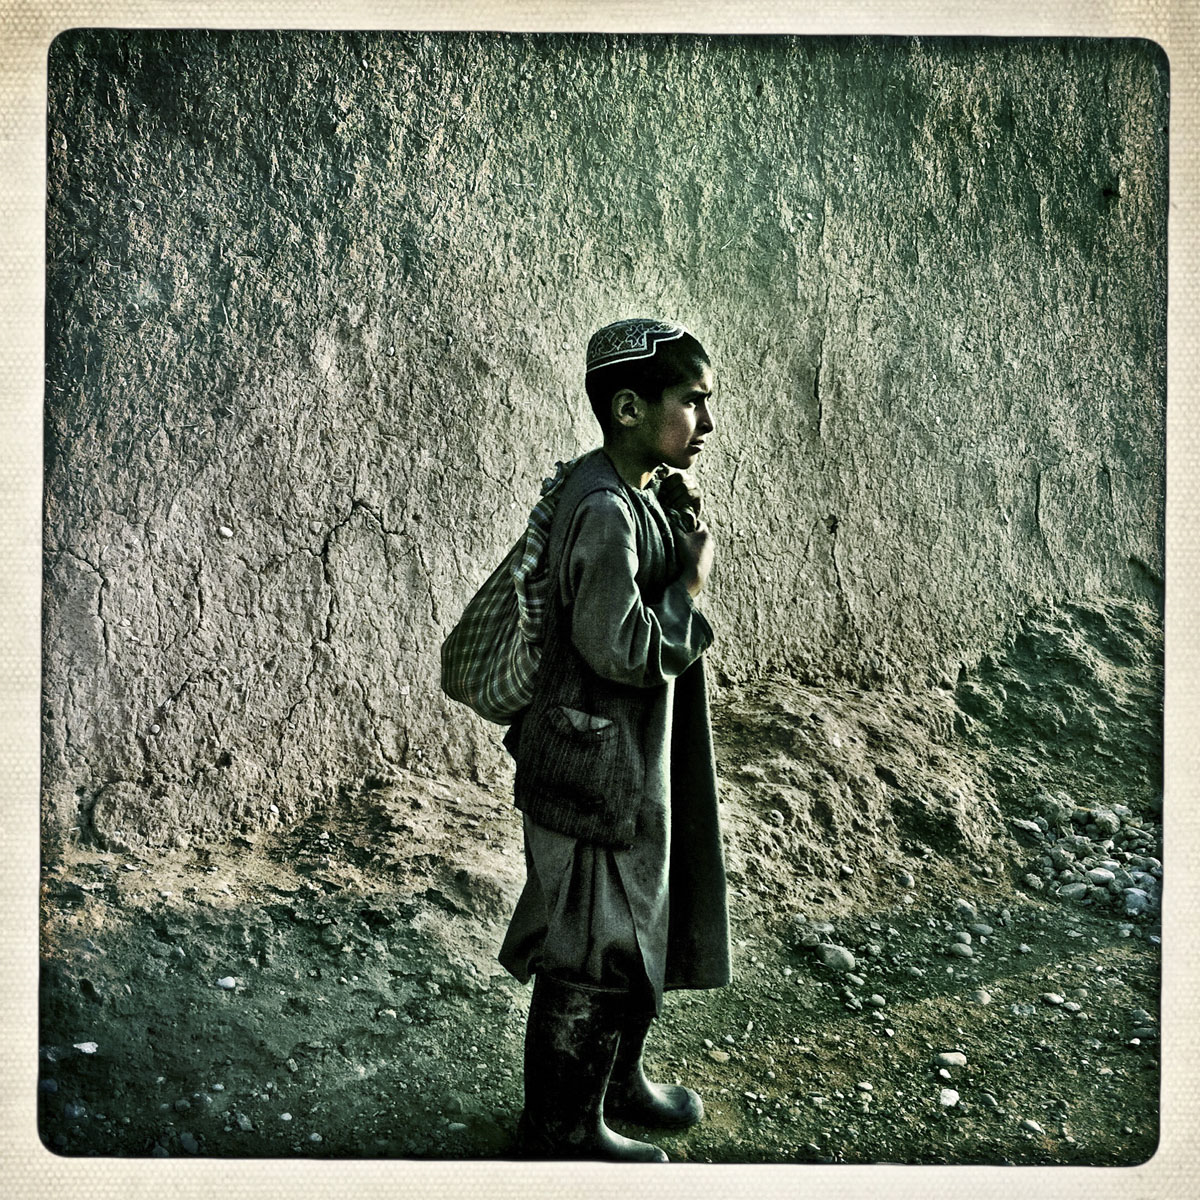 Afghan boy in the village of Kunder, Helmand Province, Afghanistan on October 29, 2010.